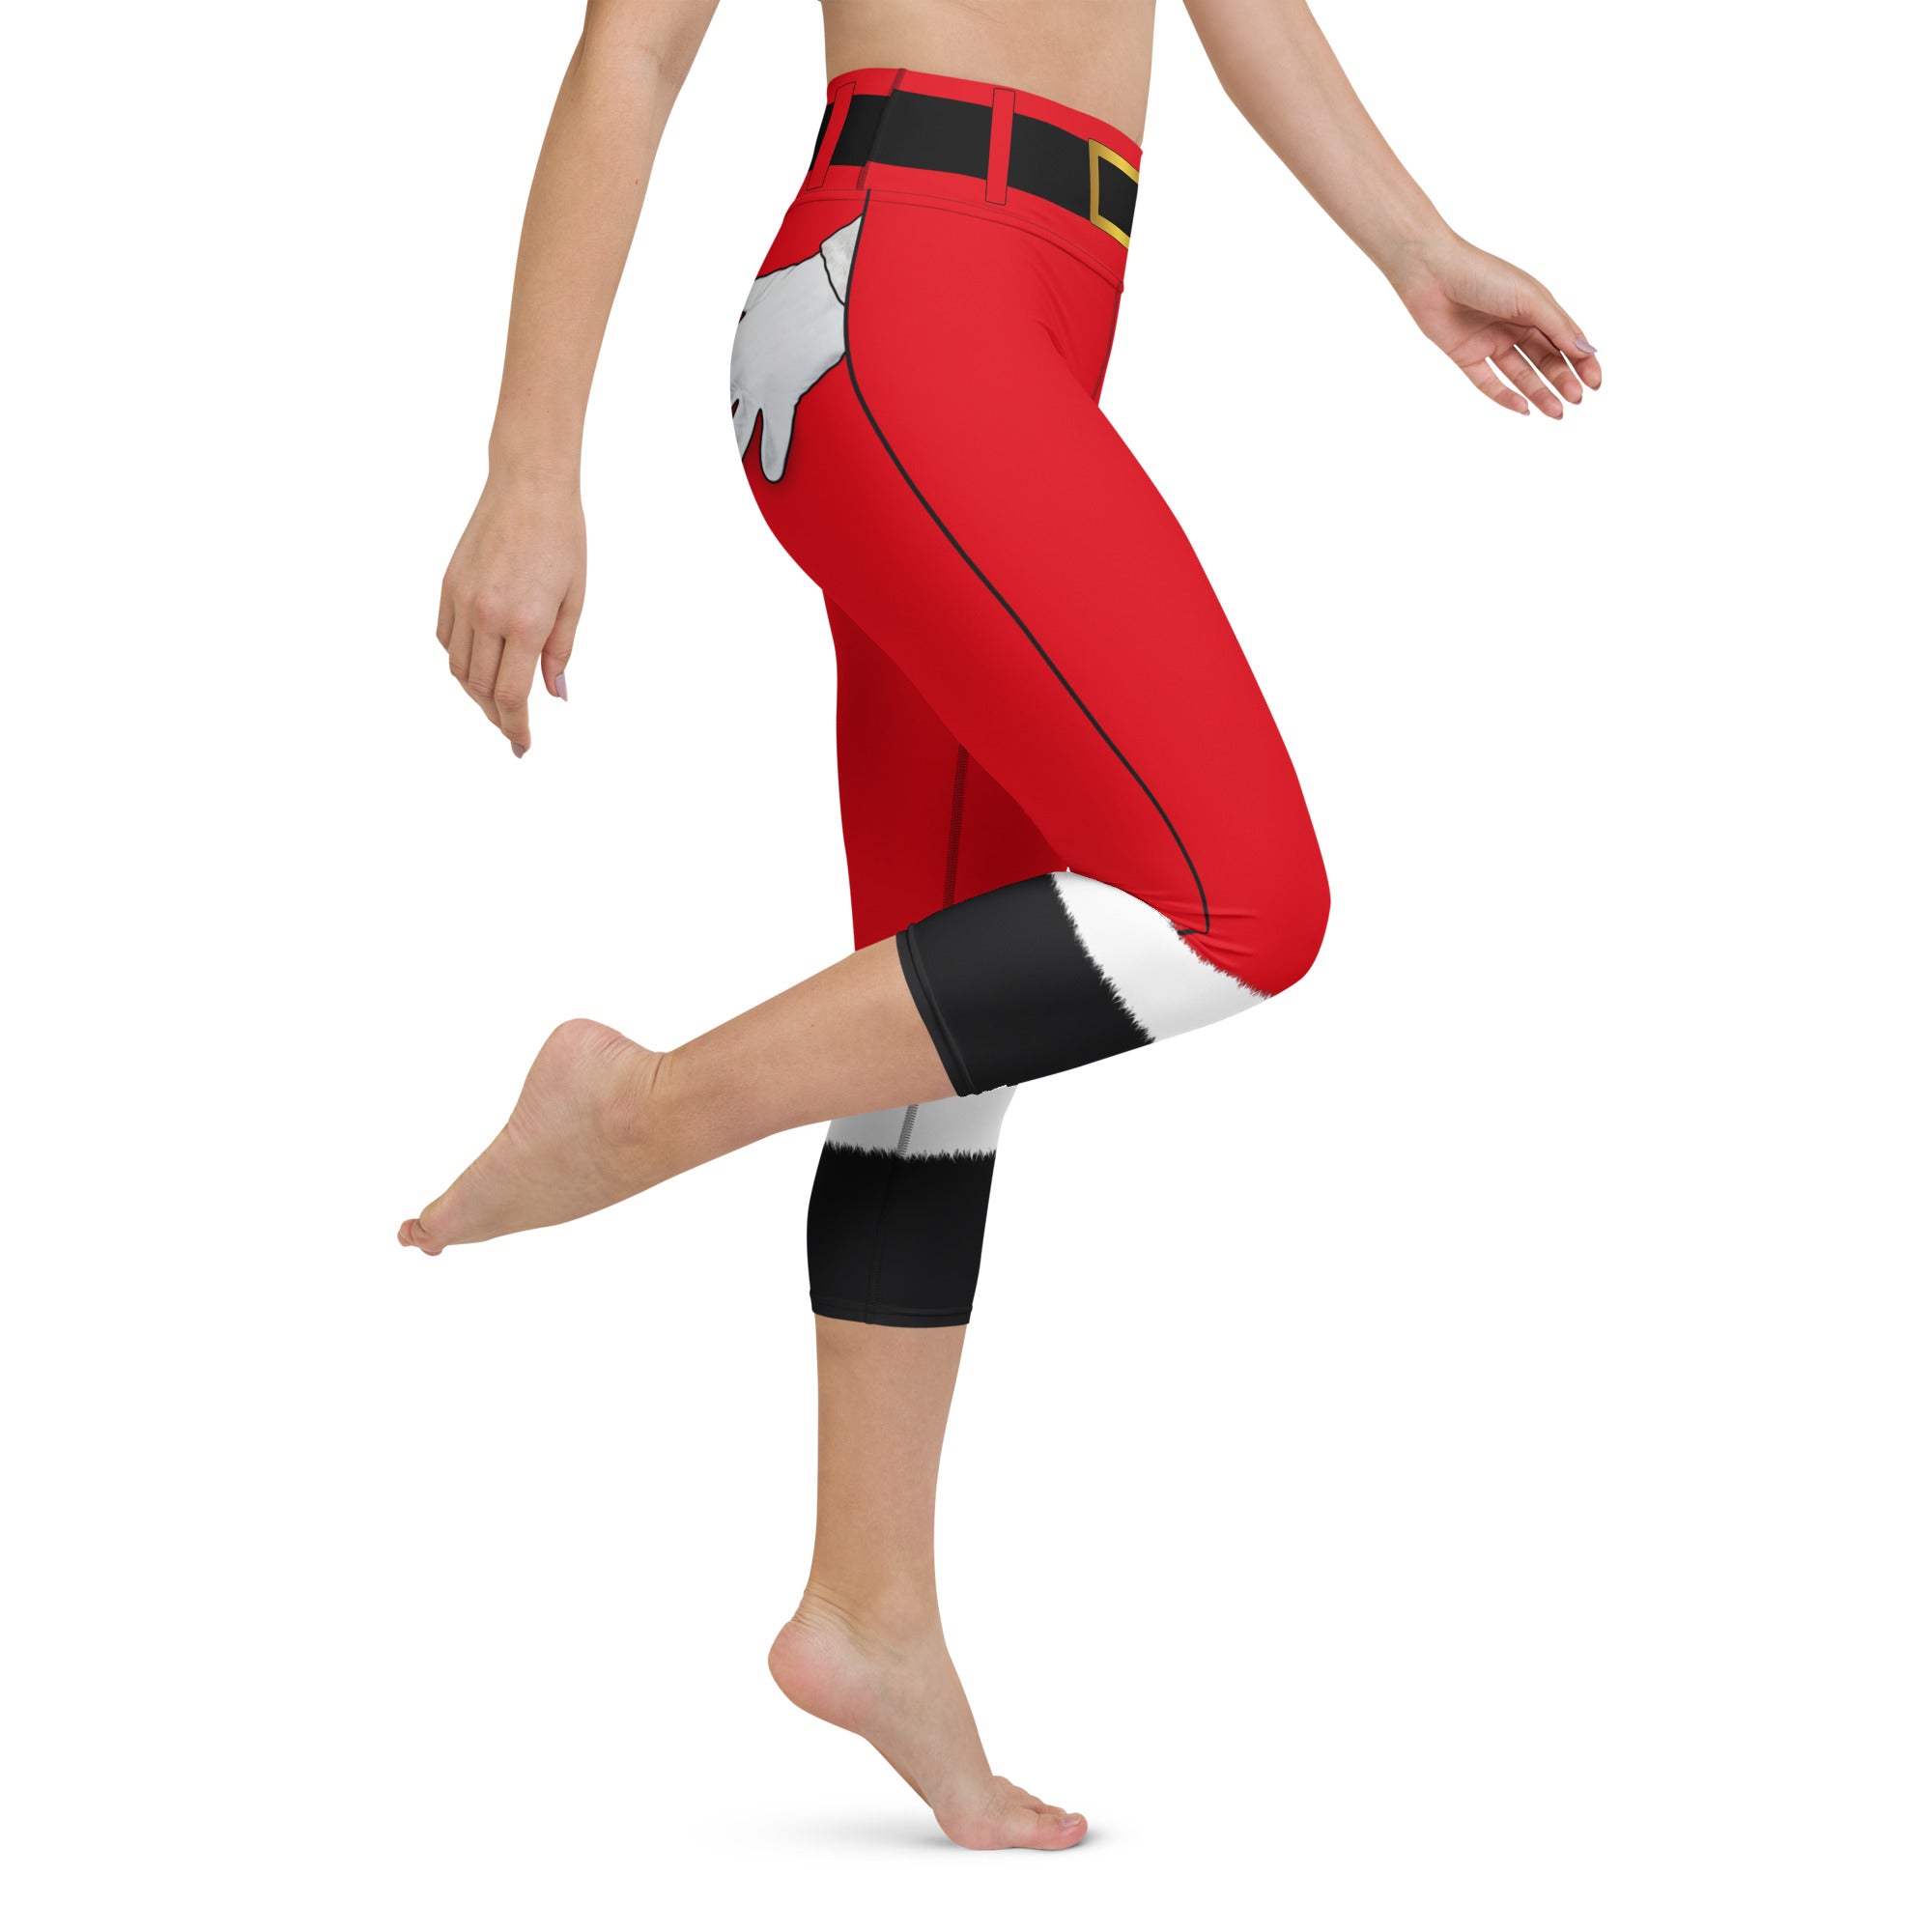 Naughty Santa Outfit Yoga Capris